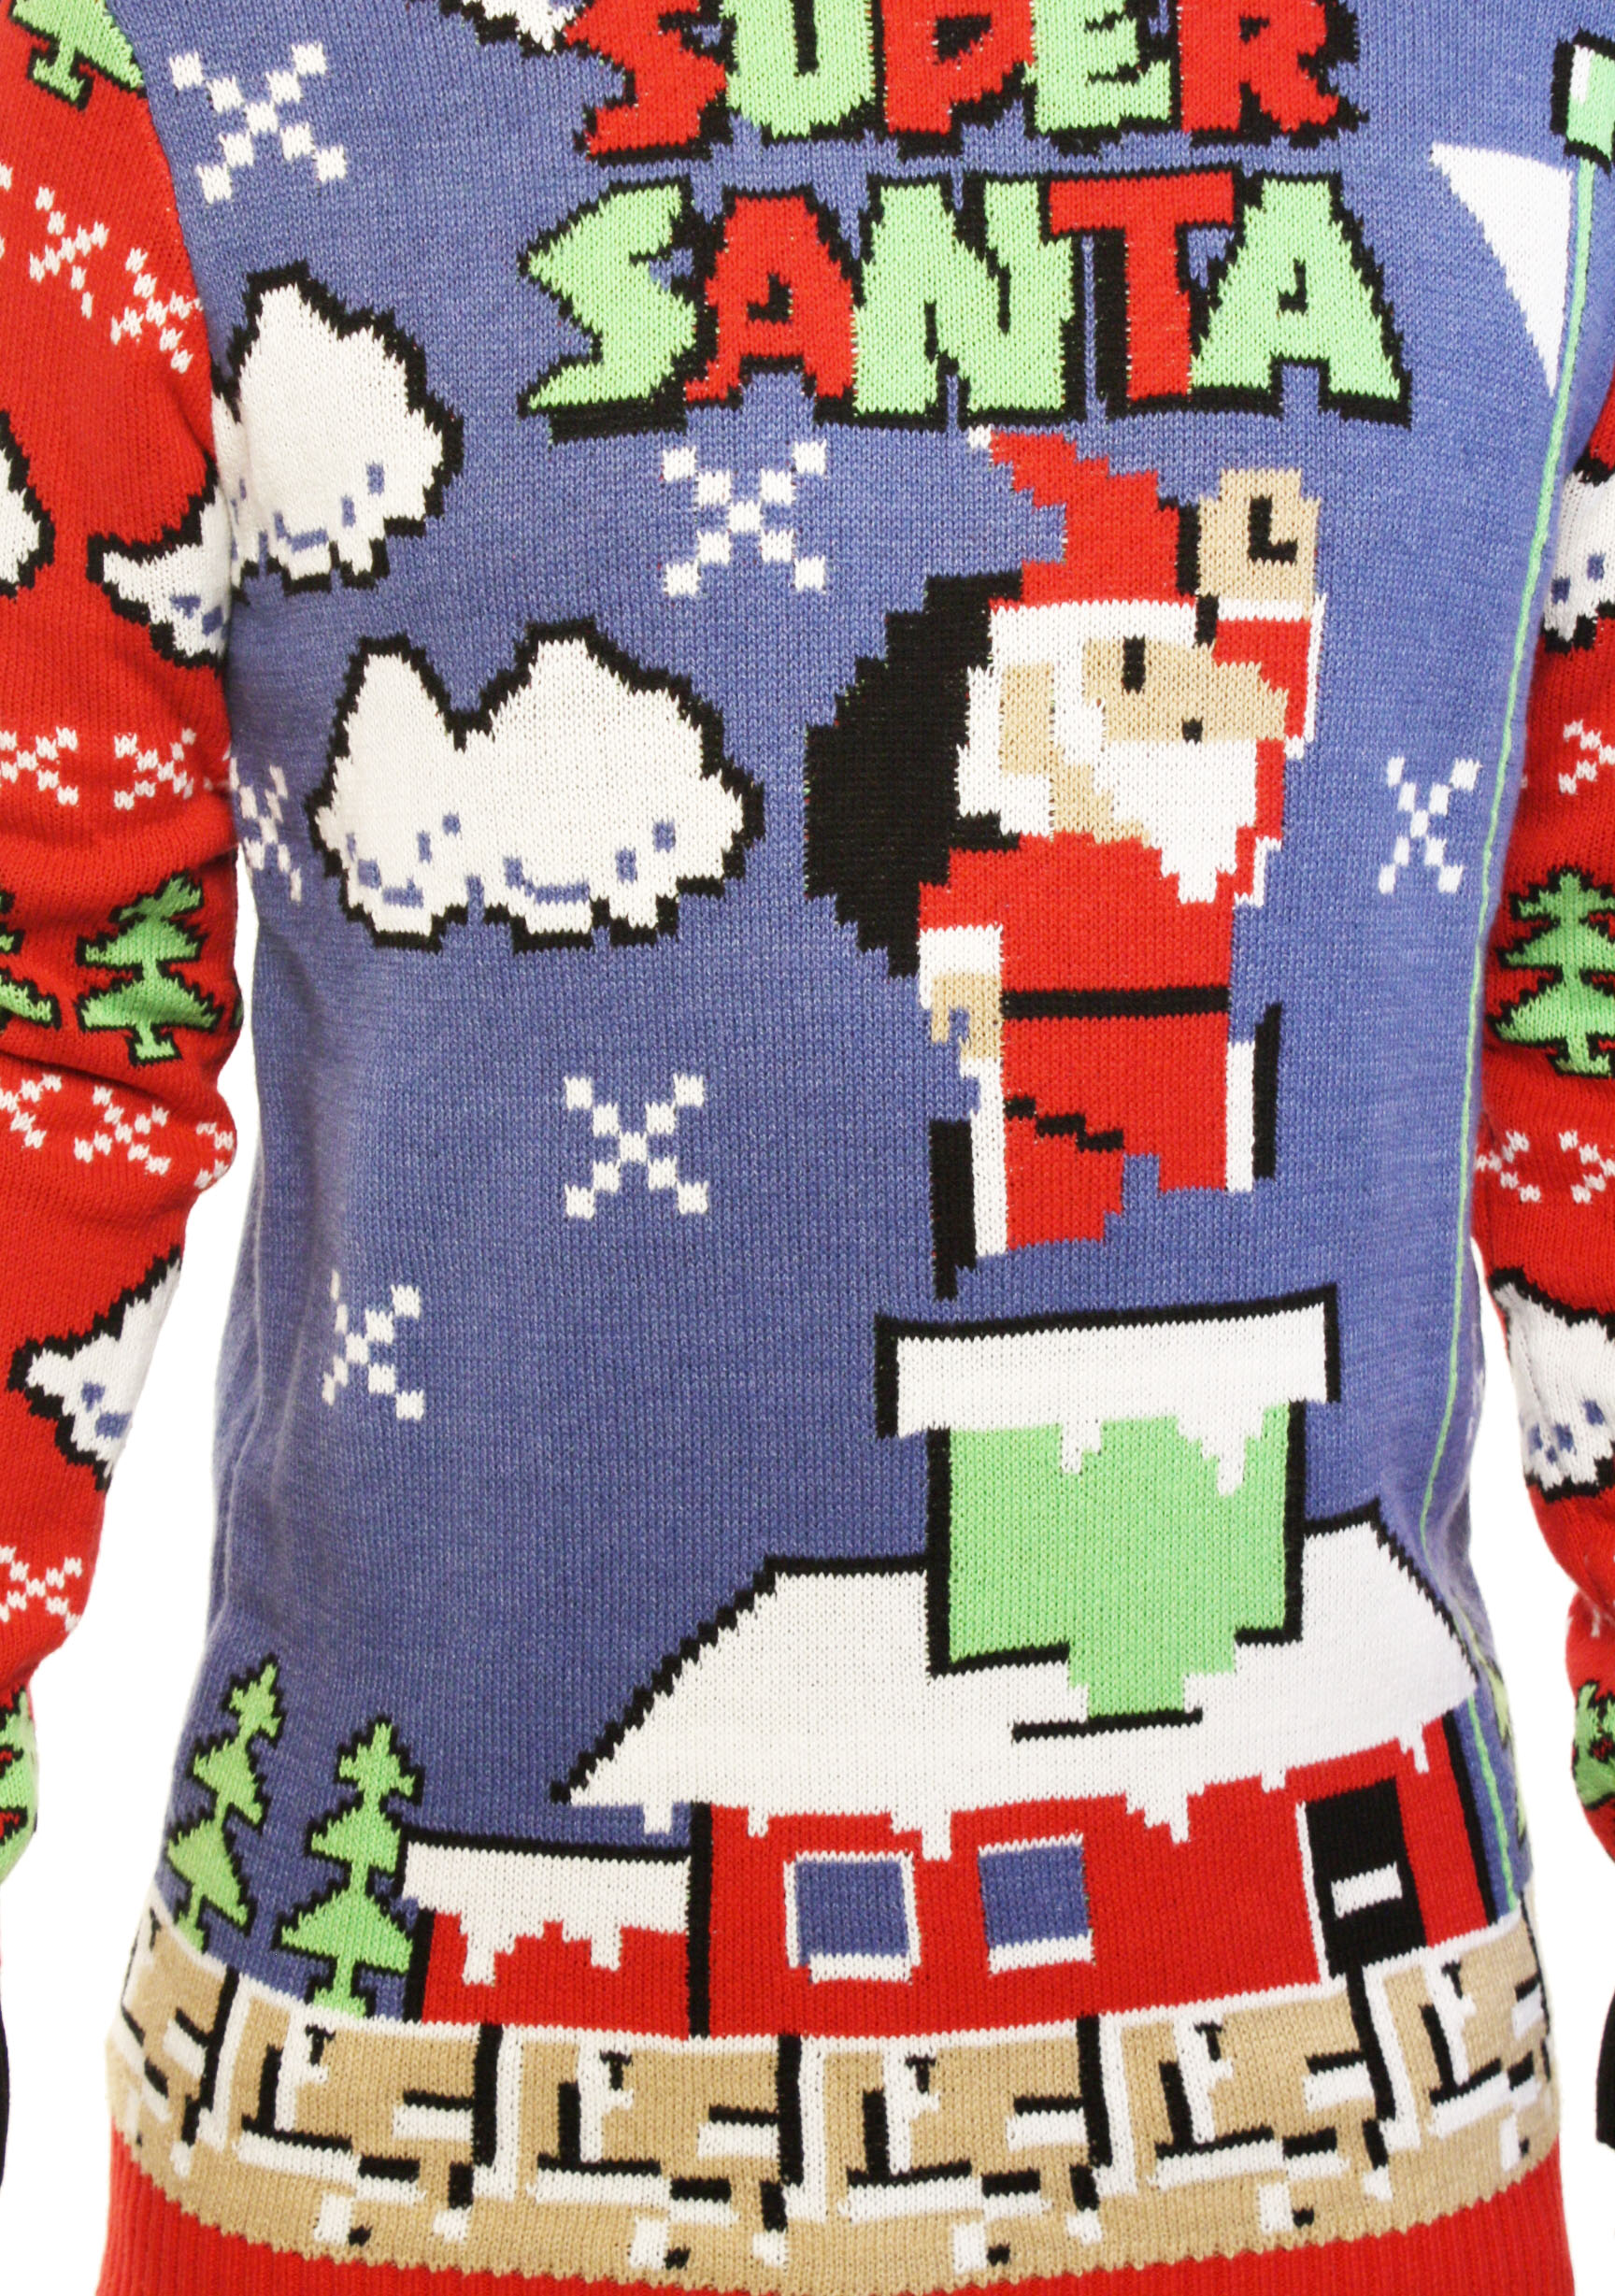 Ugly Christmas Party Ugly Sweater Unisex Mens Assorted Santa Xmas Sweatshirt